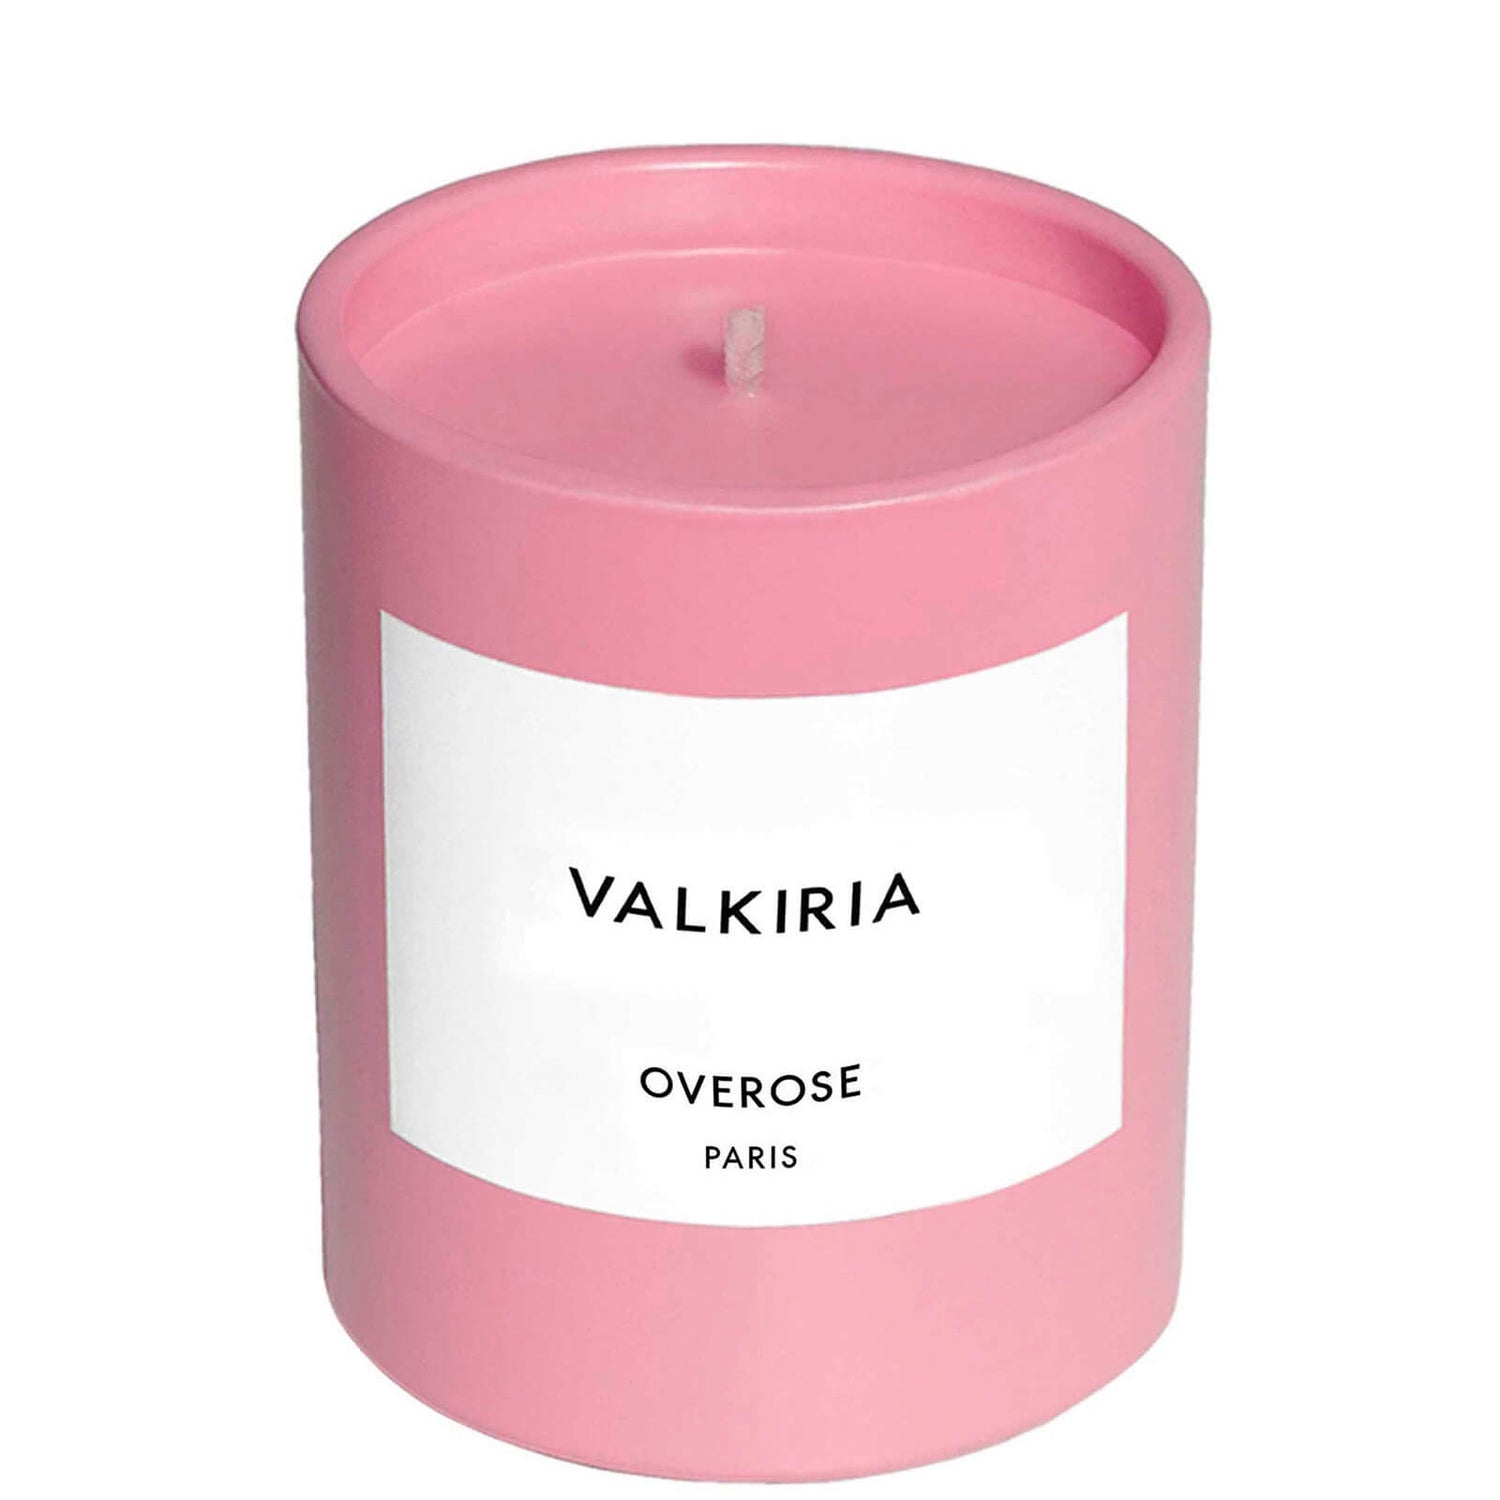 OVEROSE Valkiria Candle